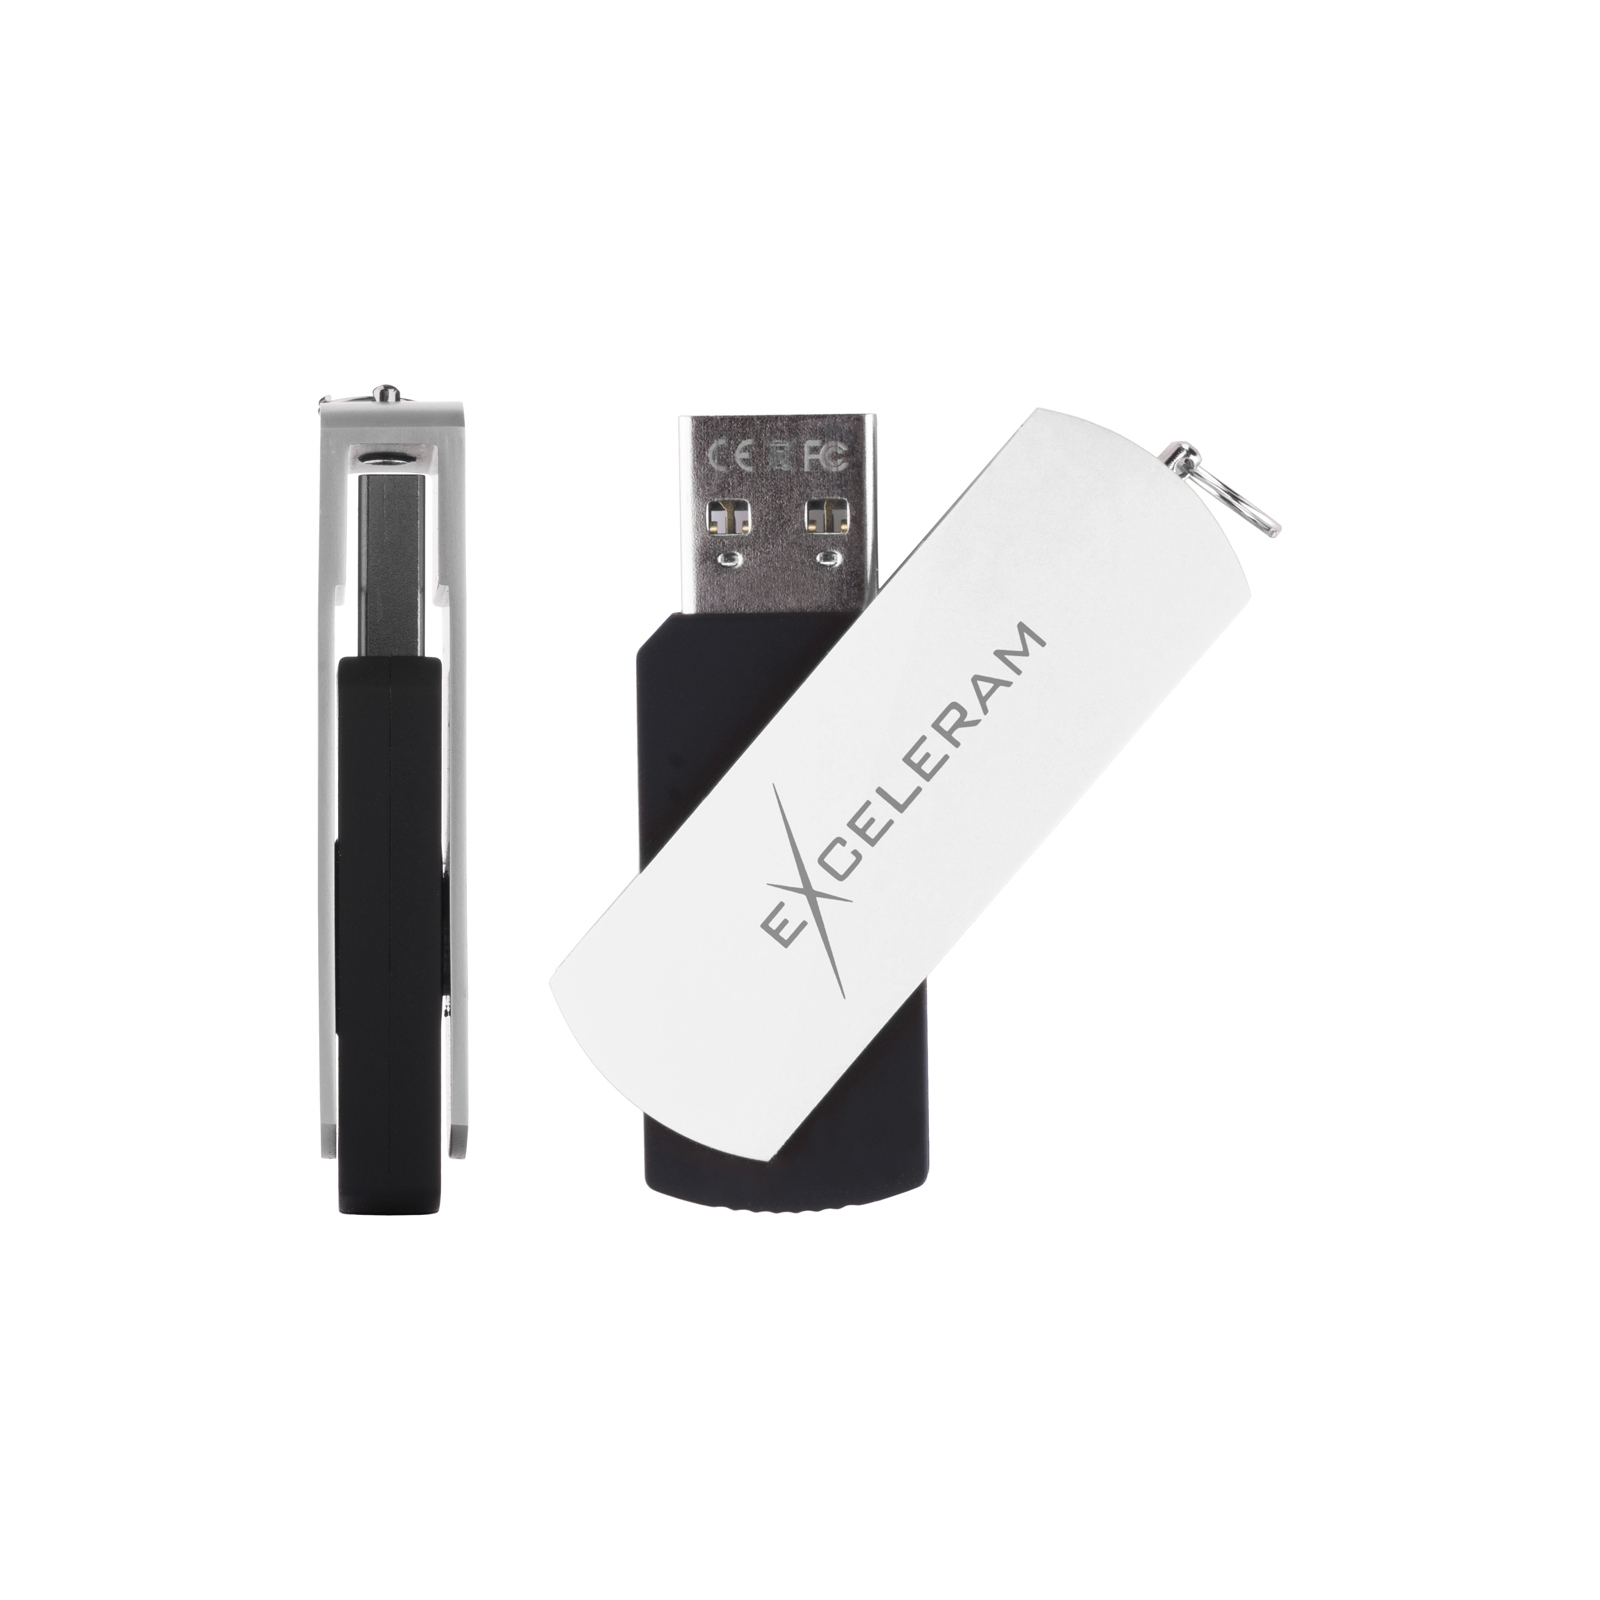 USB флеш накопитель eXceleram 32GB P2 Series Yellow2/Black USB 2.0 (EXP2U2Y2B32) изображение 4